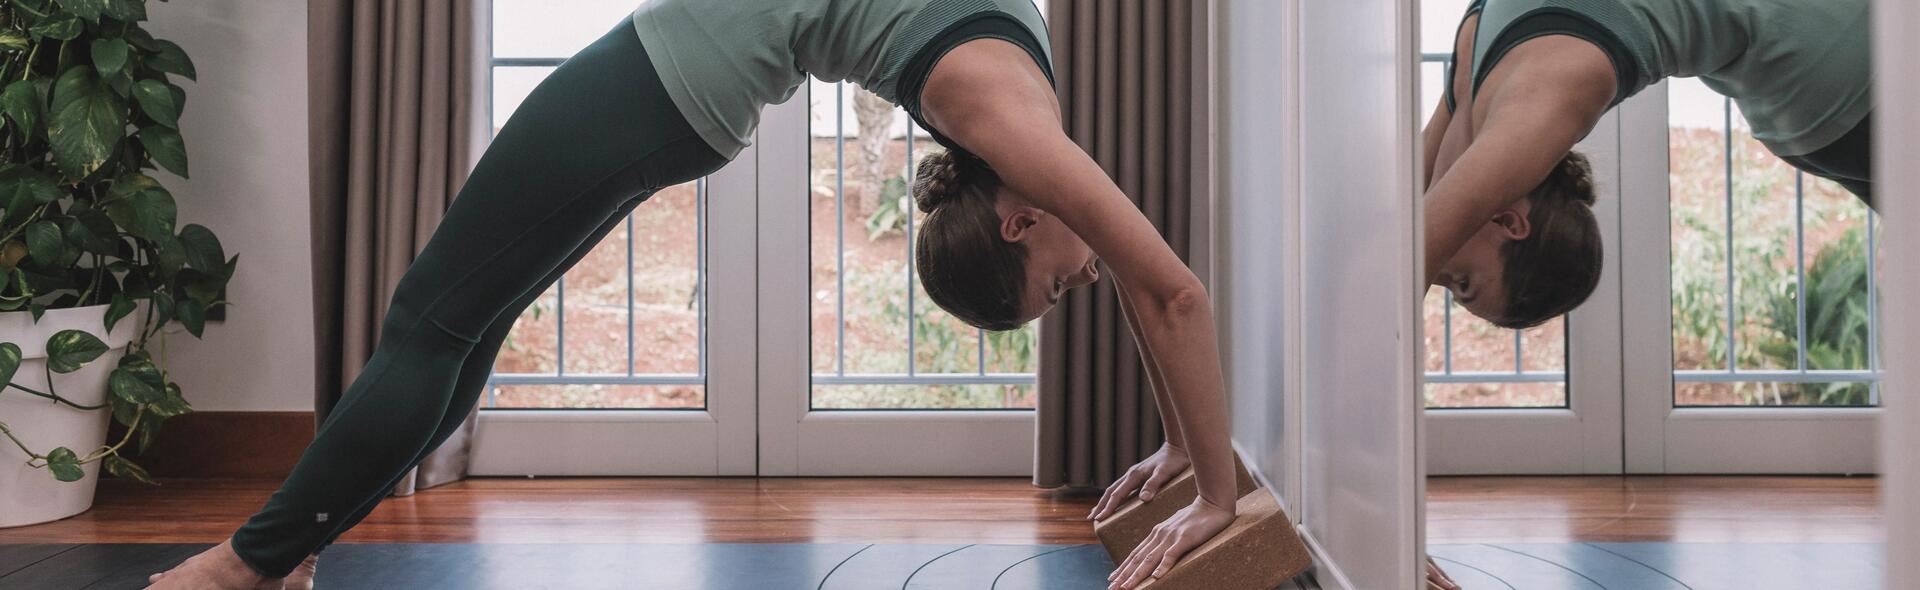 gentle yoga: 10 restorative poses for renewal - YOGI TIMES